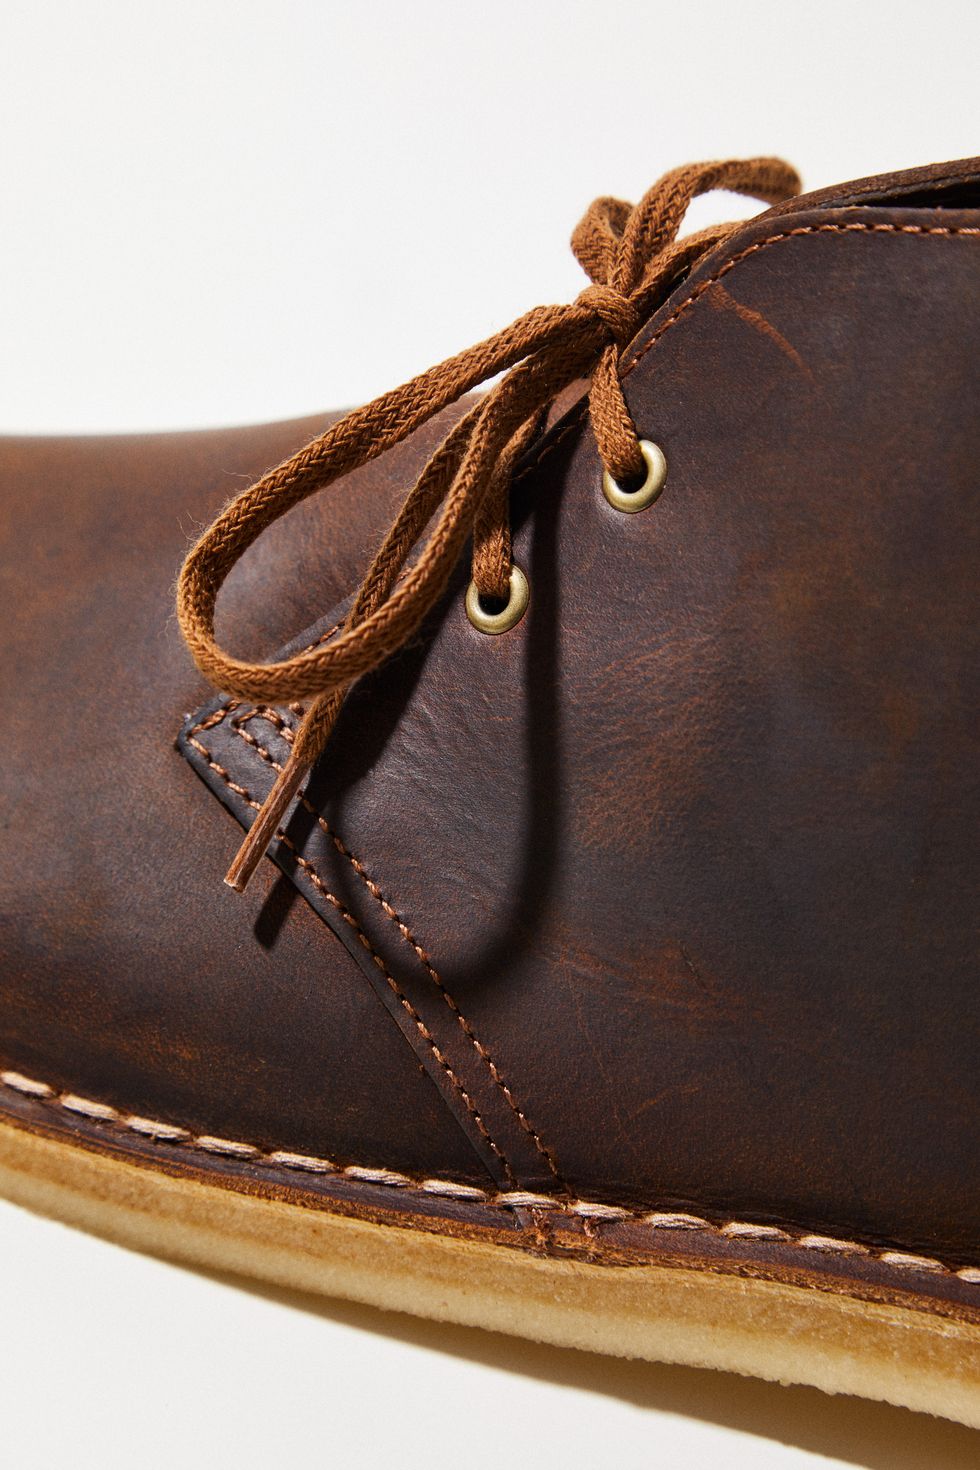 Clarks Originals Desert Boots Review, Endorsement, and History